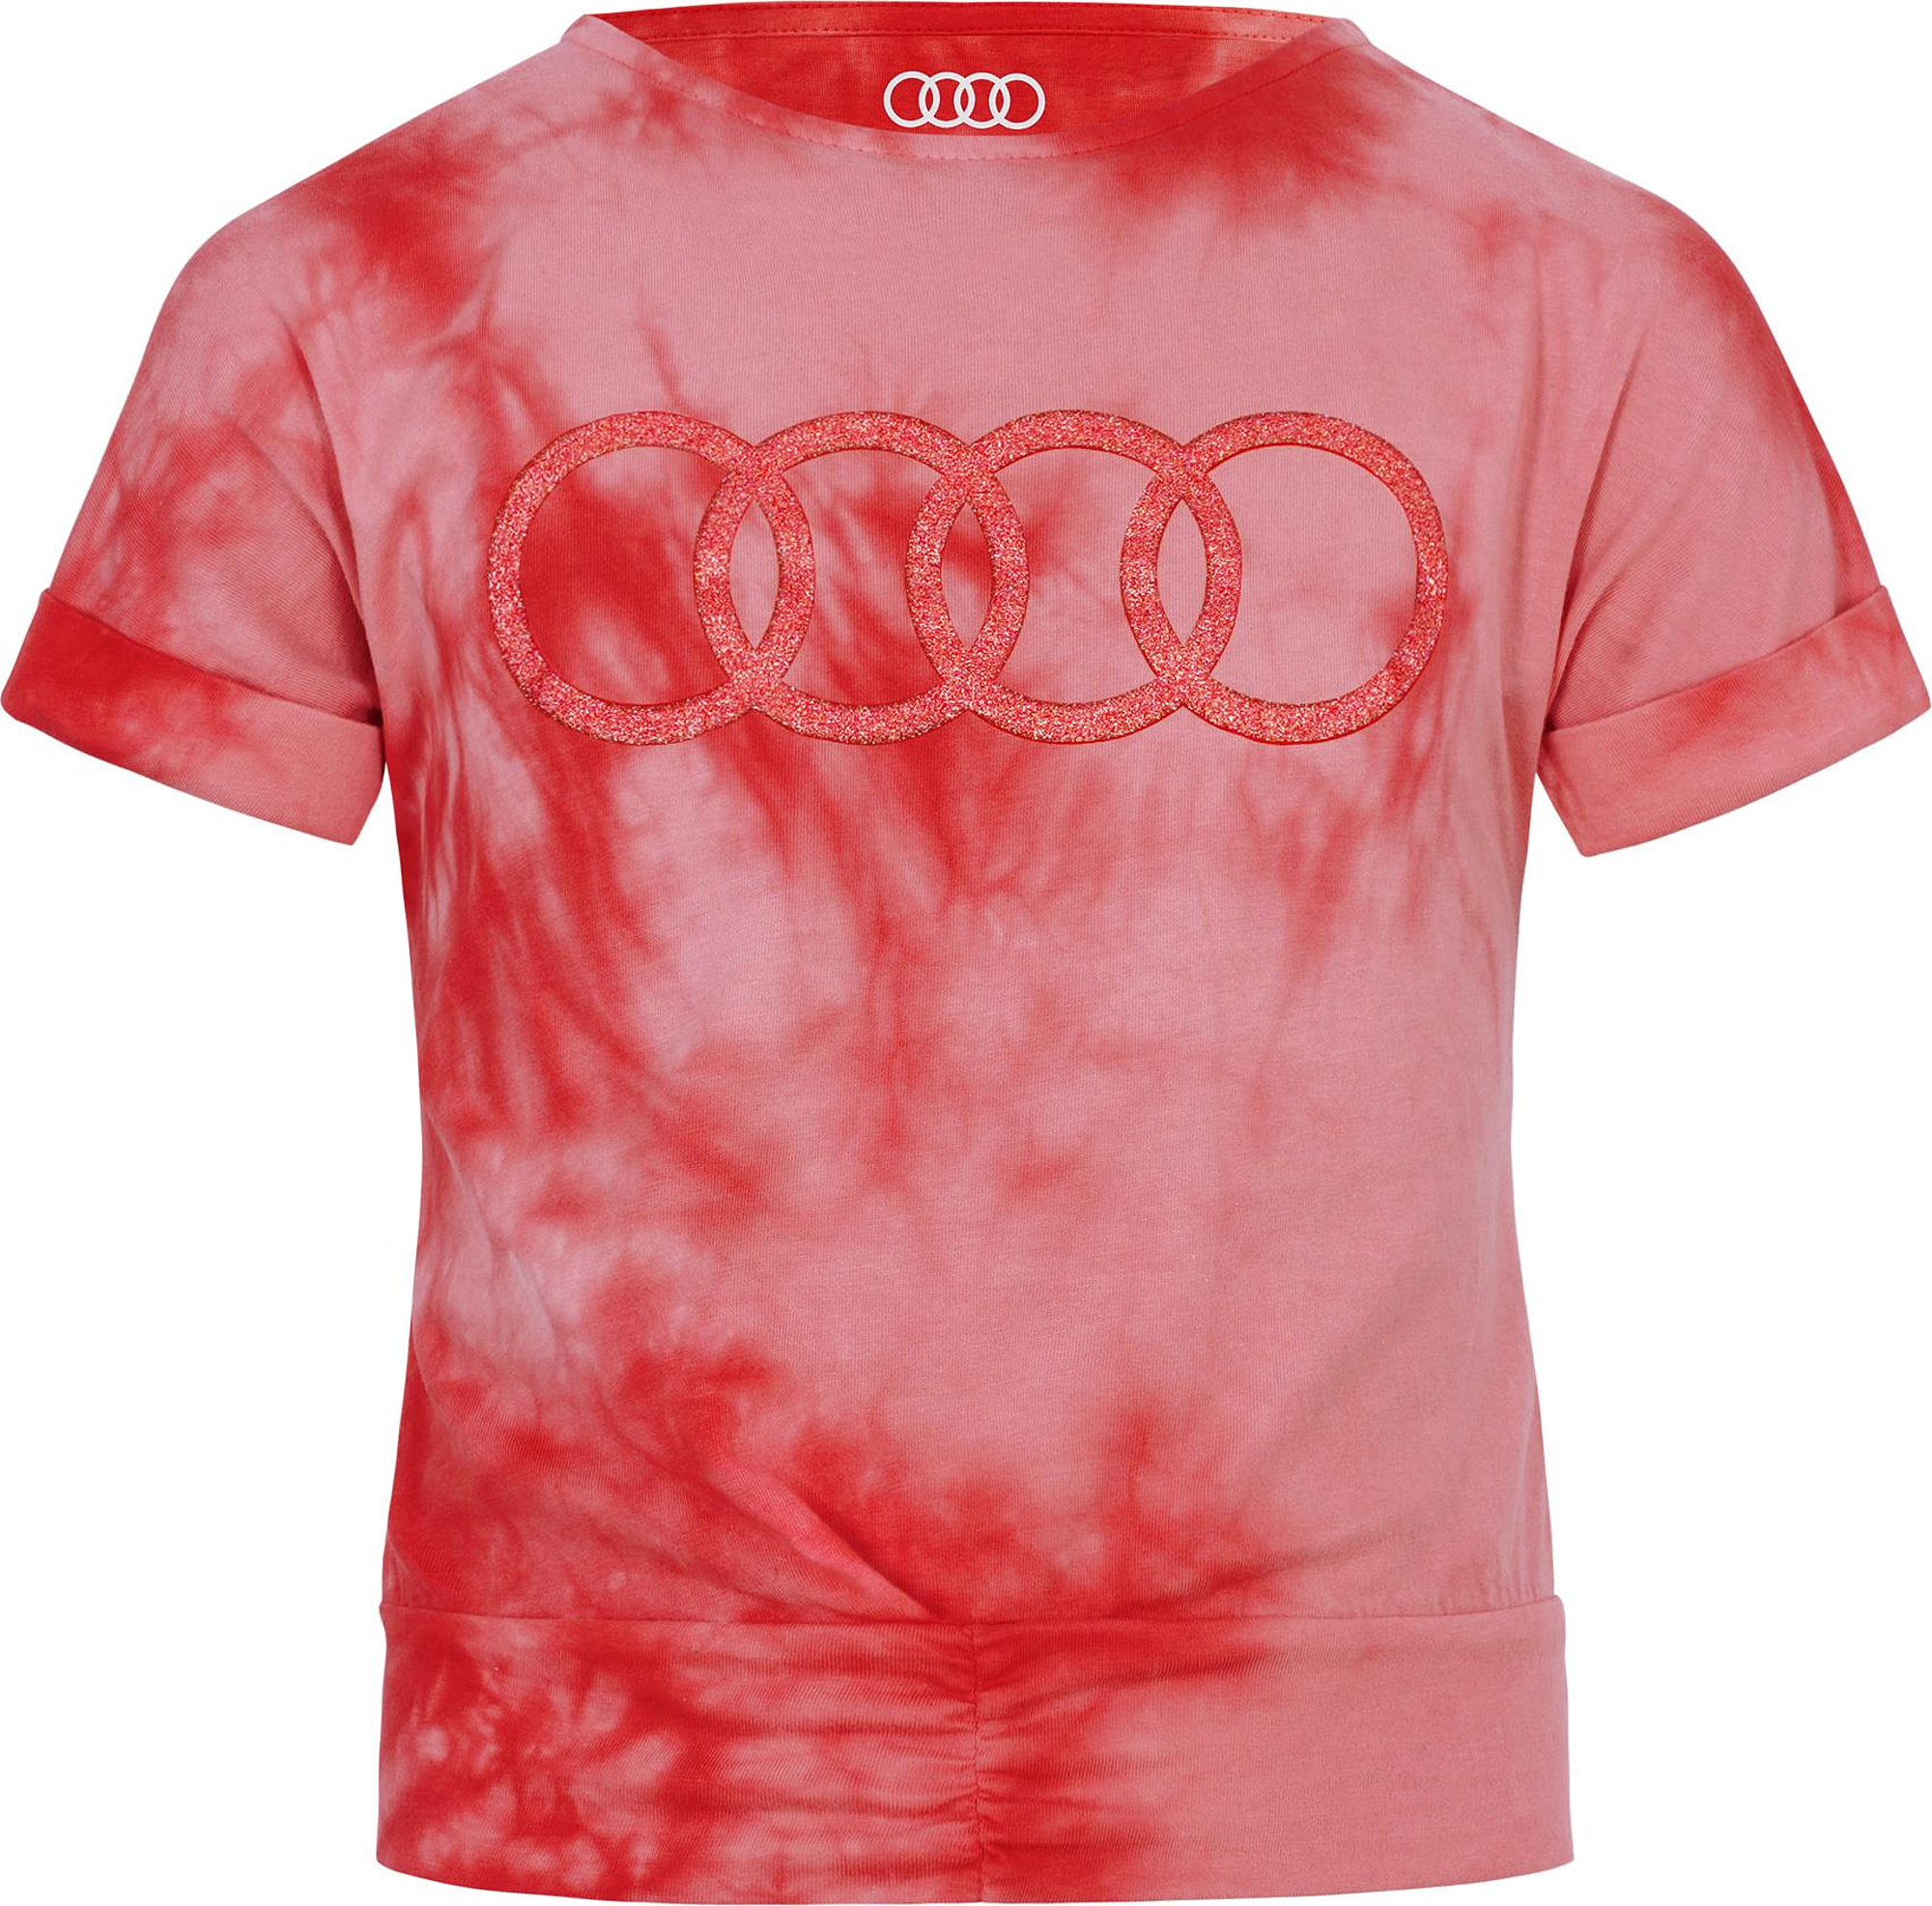 lekkage erger maken toekomst Audi - Audi t-shirt meisjes, rood - 134/140